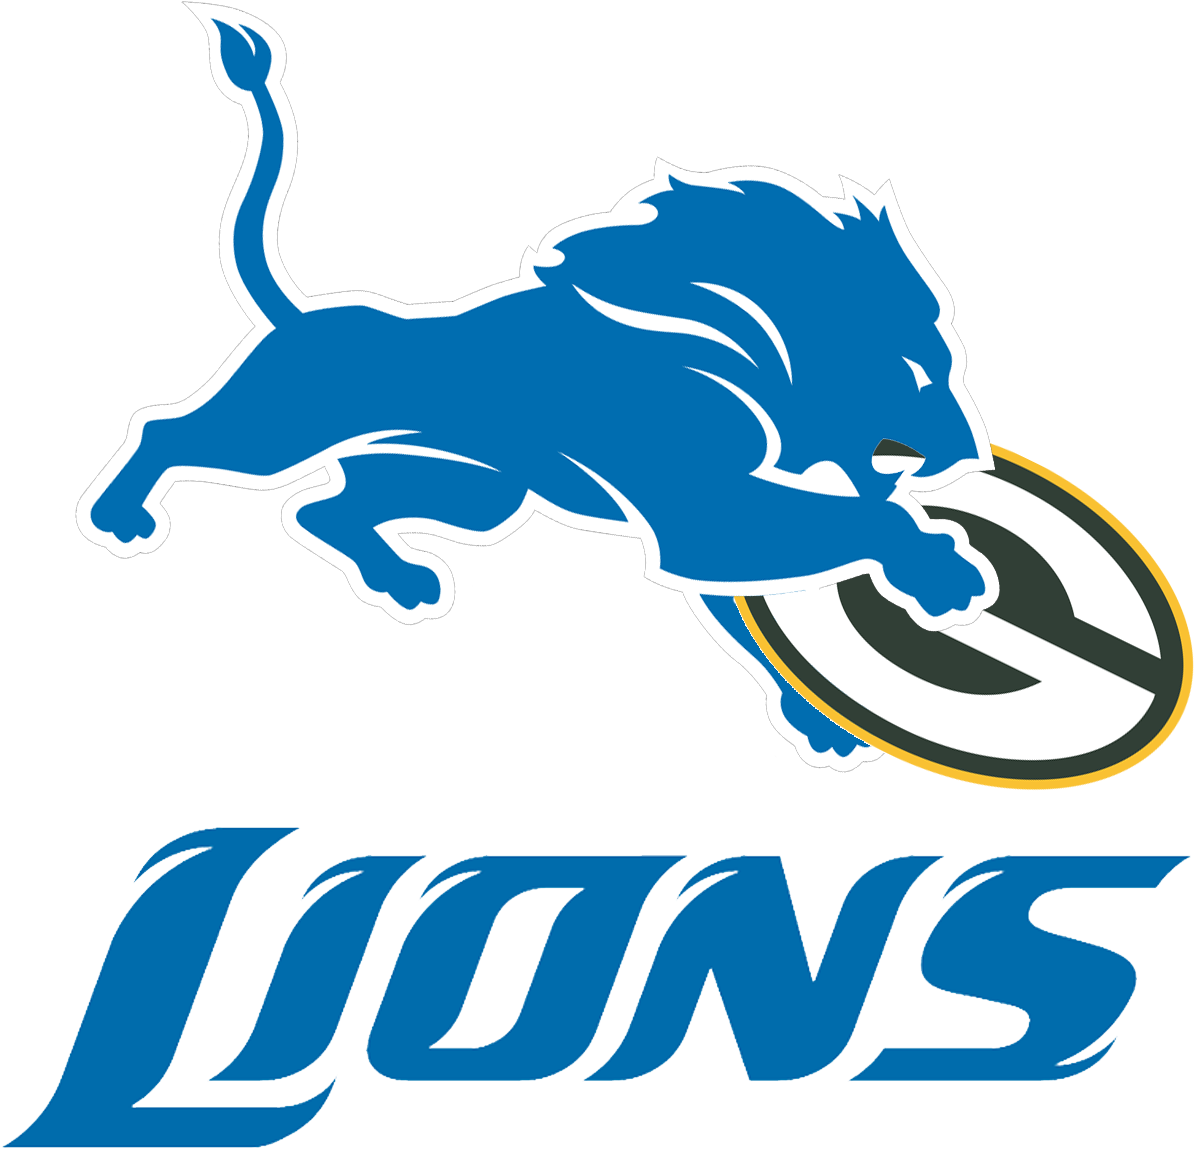 Lets Go Lions, Sweep The Pack 1 Day Left - Detroit Lions Logo (1200x1200)